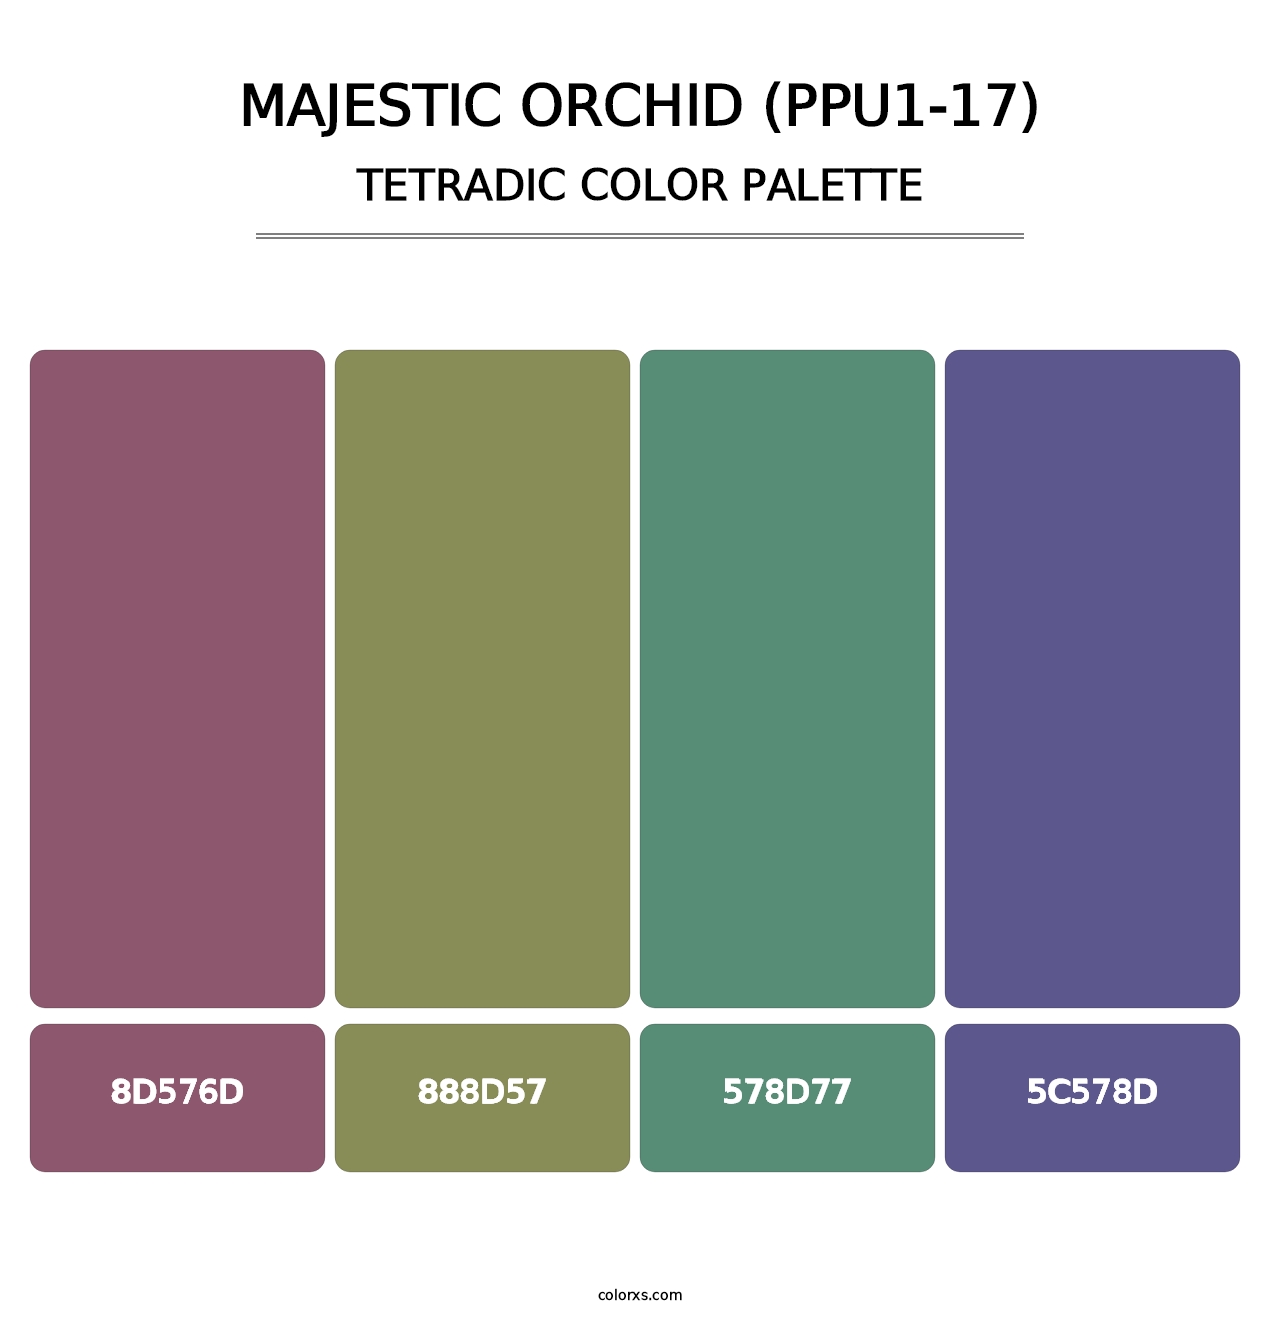 Majestic Orchid (PPU1-17) - Tetradic Color Palette